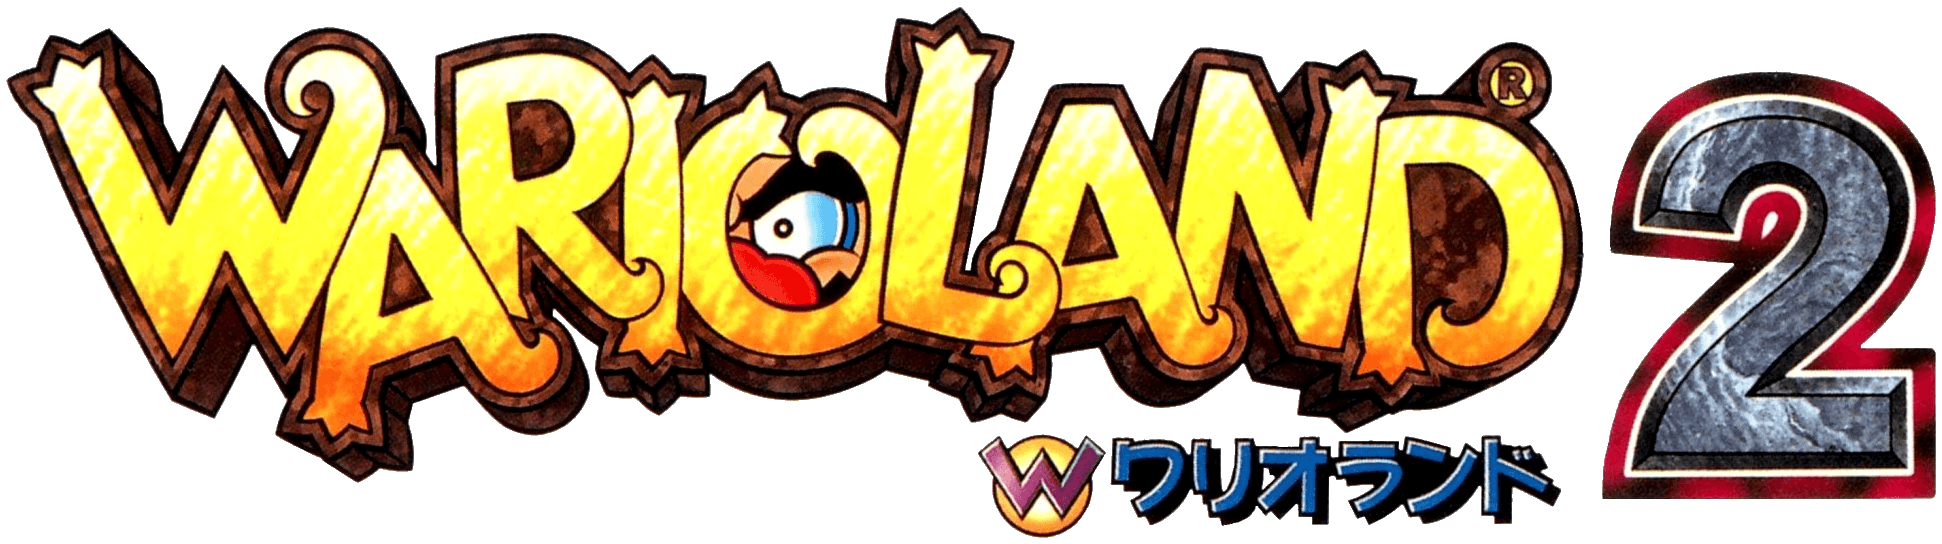 Wario Logo - Image - Japanese Logo - Wario Land II.png | Logopedia | FANDOM ...